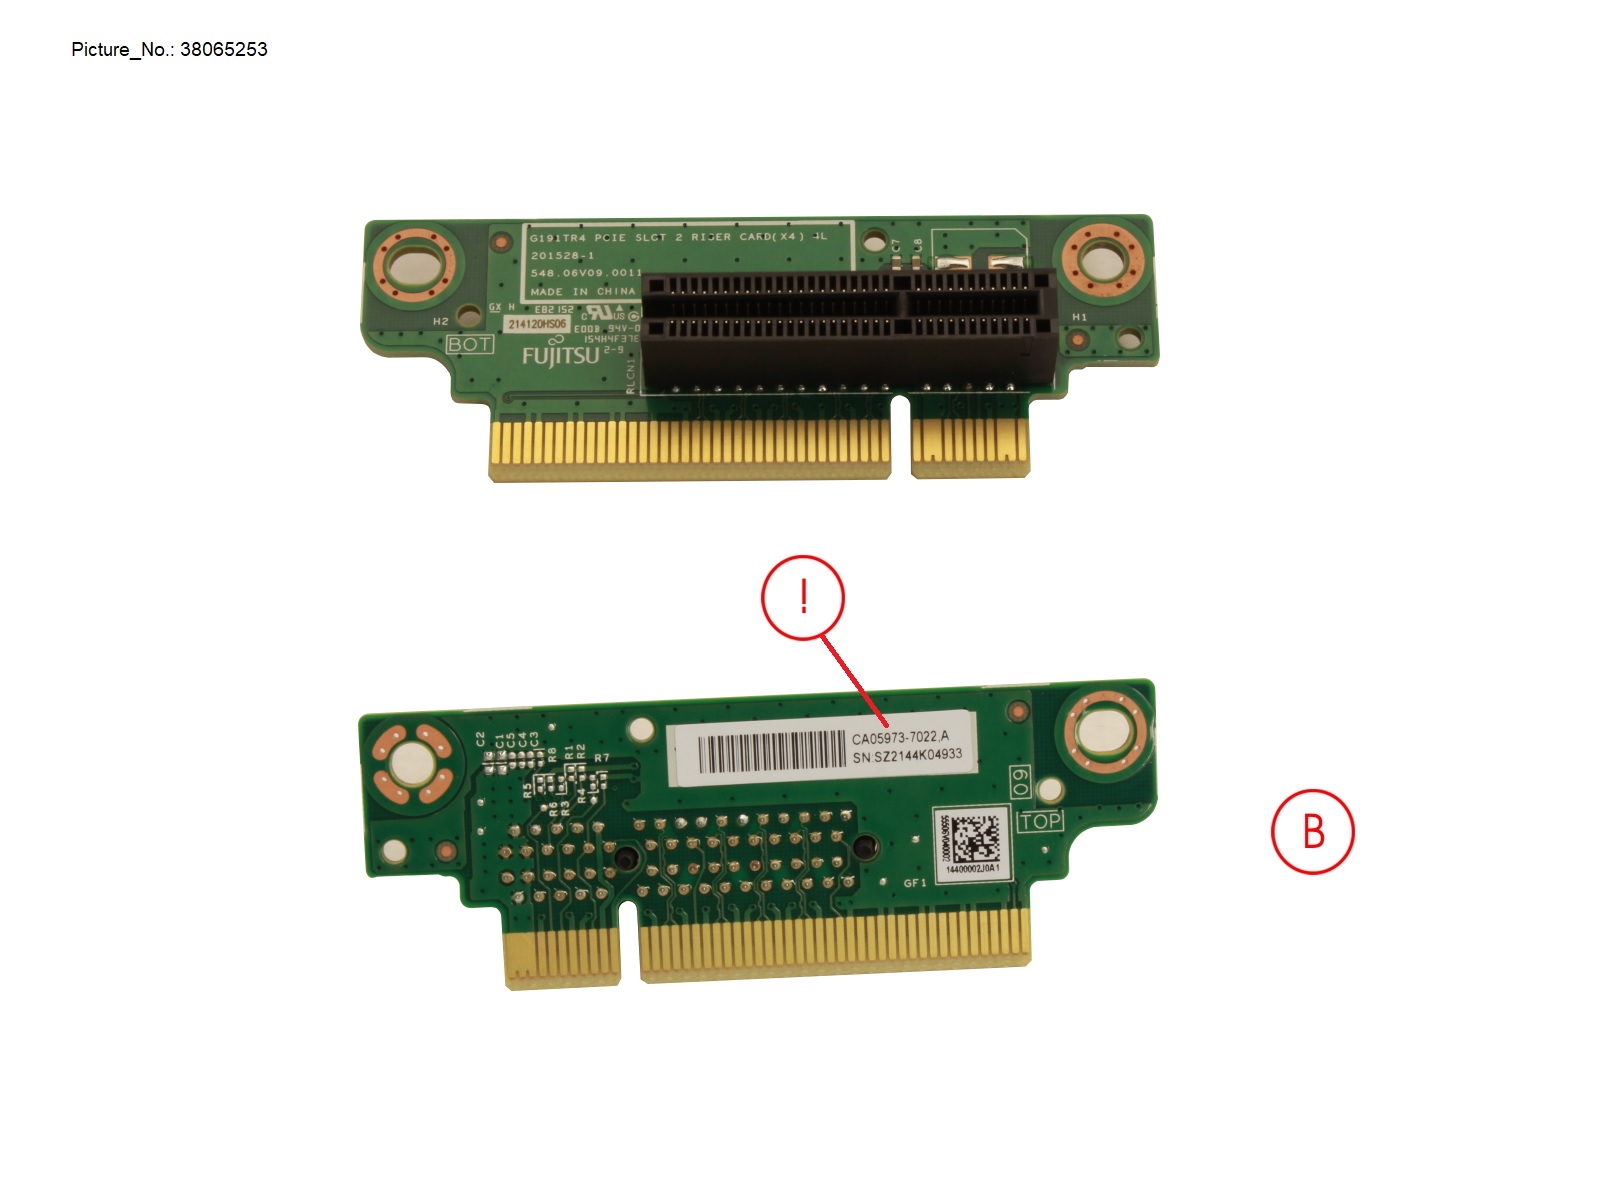 PCI RISER CARD (X4)